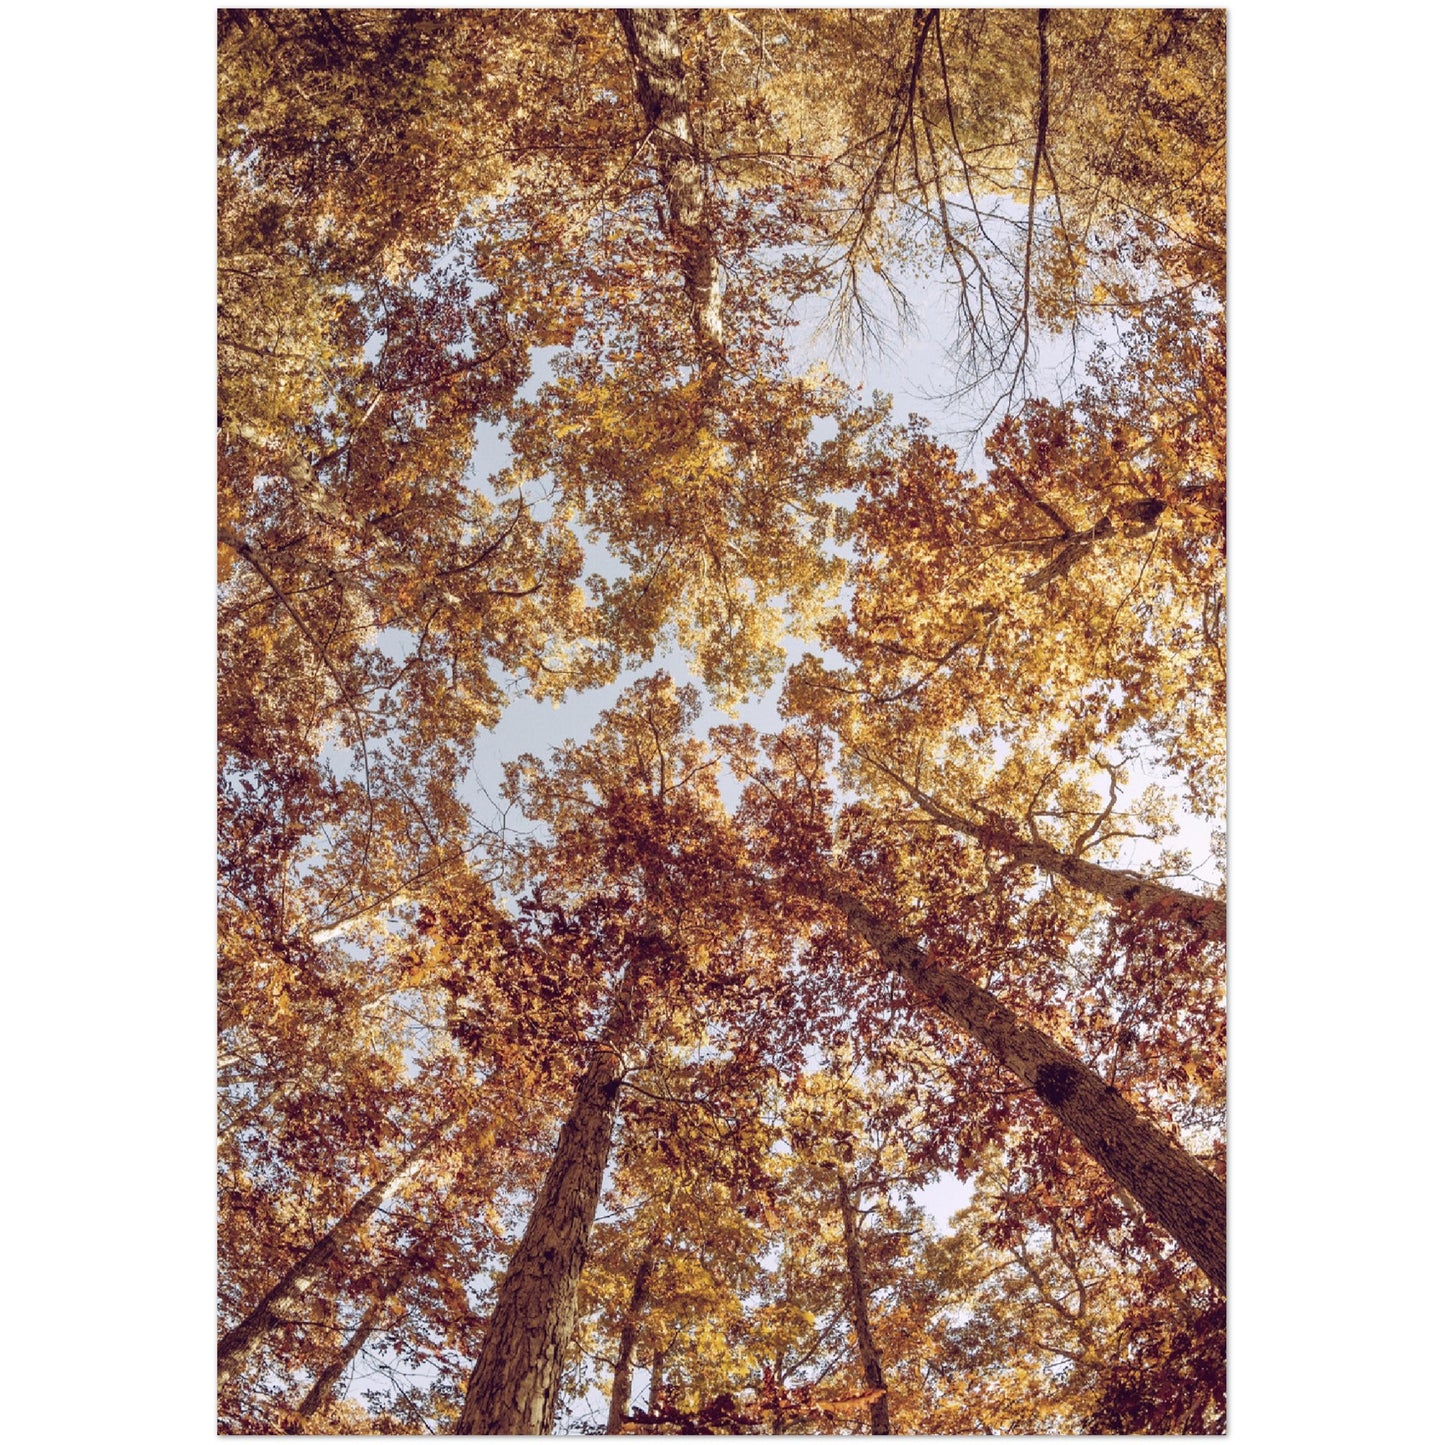 Autumn Canopy Print